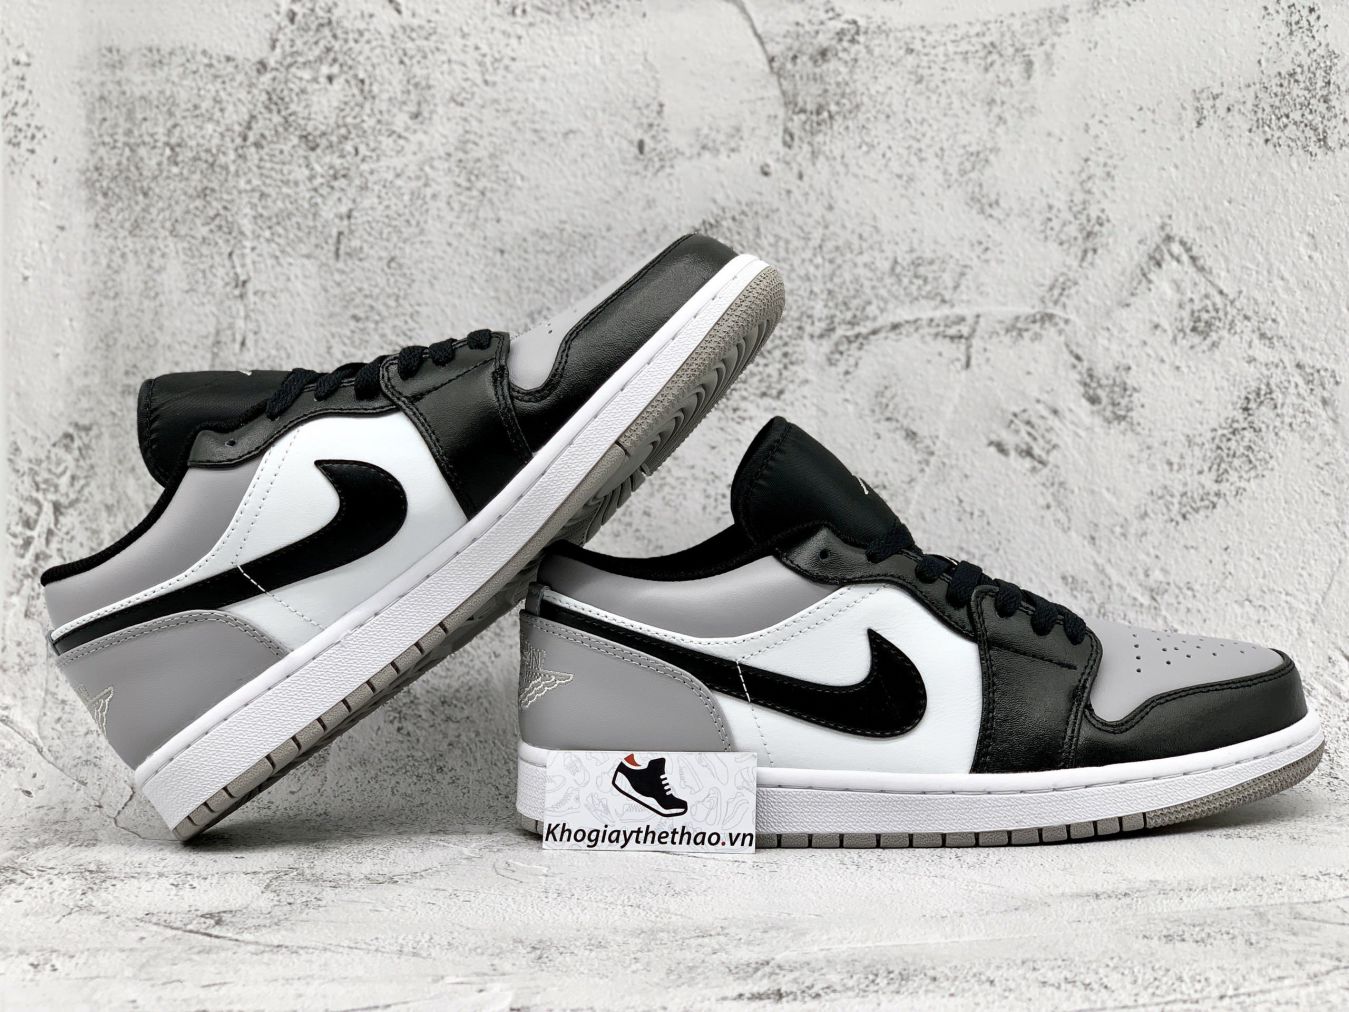 Giày Nike Air Jordan 1 Low xám đen